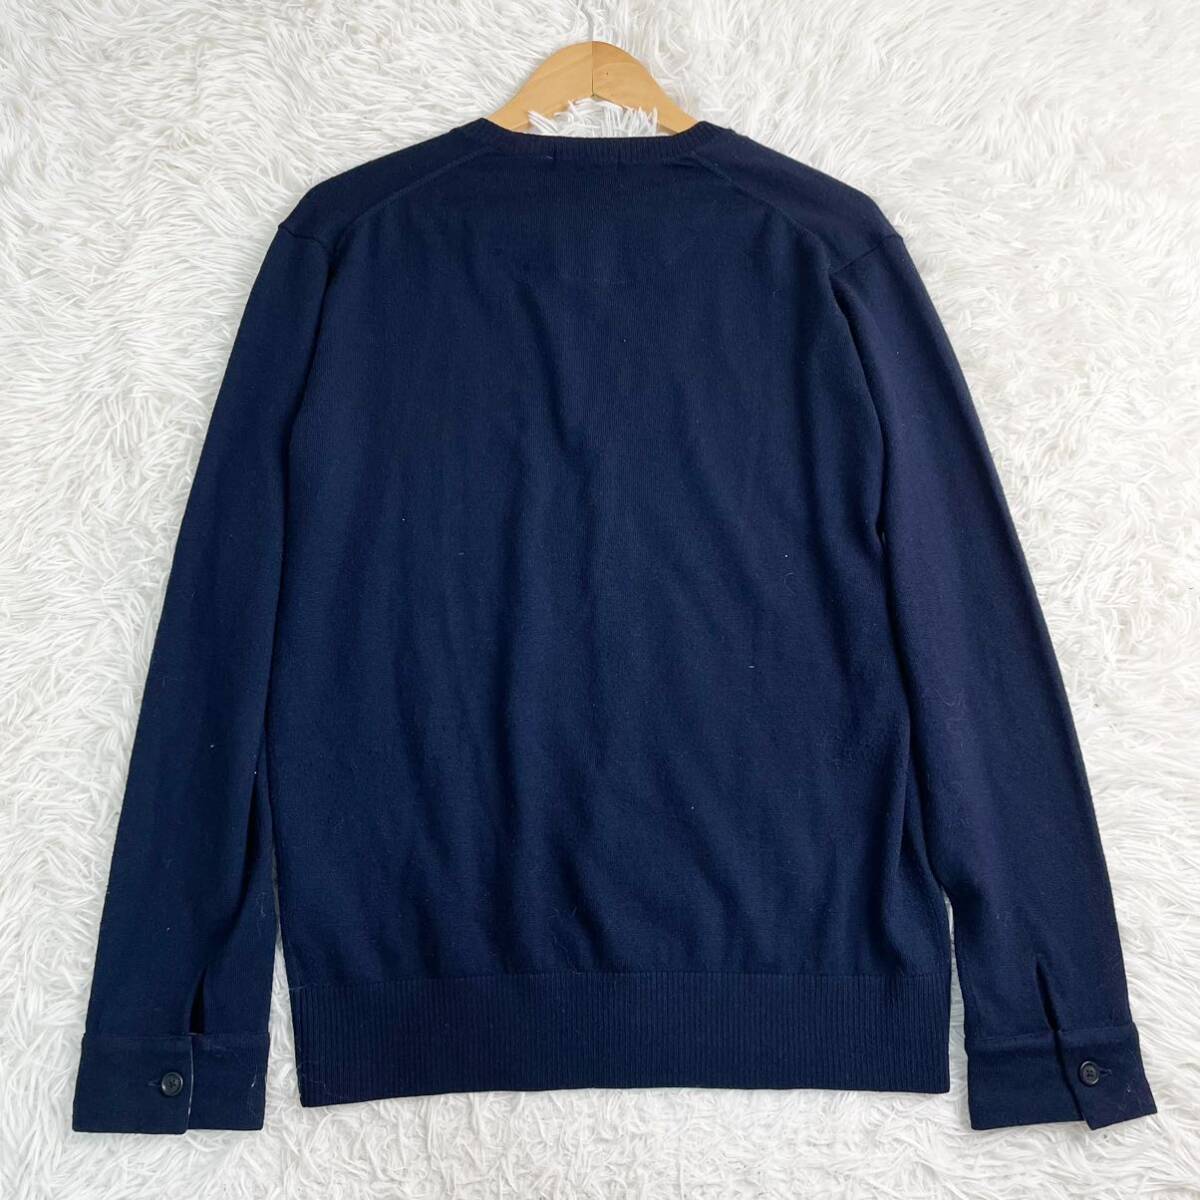 [E11]BURBERRY BLACK LABEL Burberry Black Label cardigan long sleeve knitted hose Logo noba check navy blue navy 4 XL size 